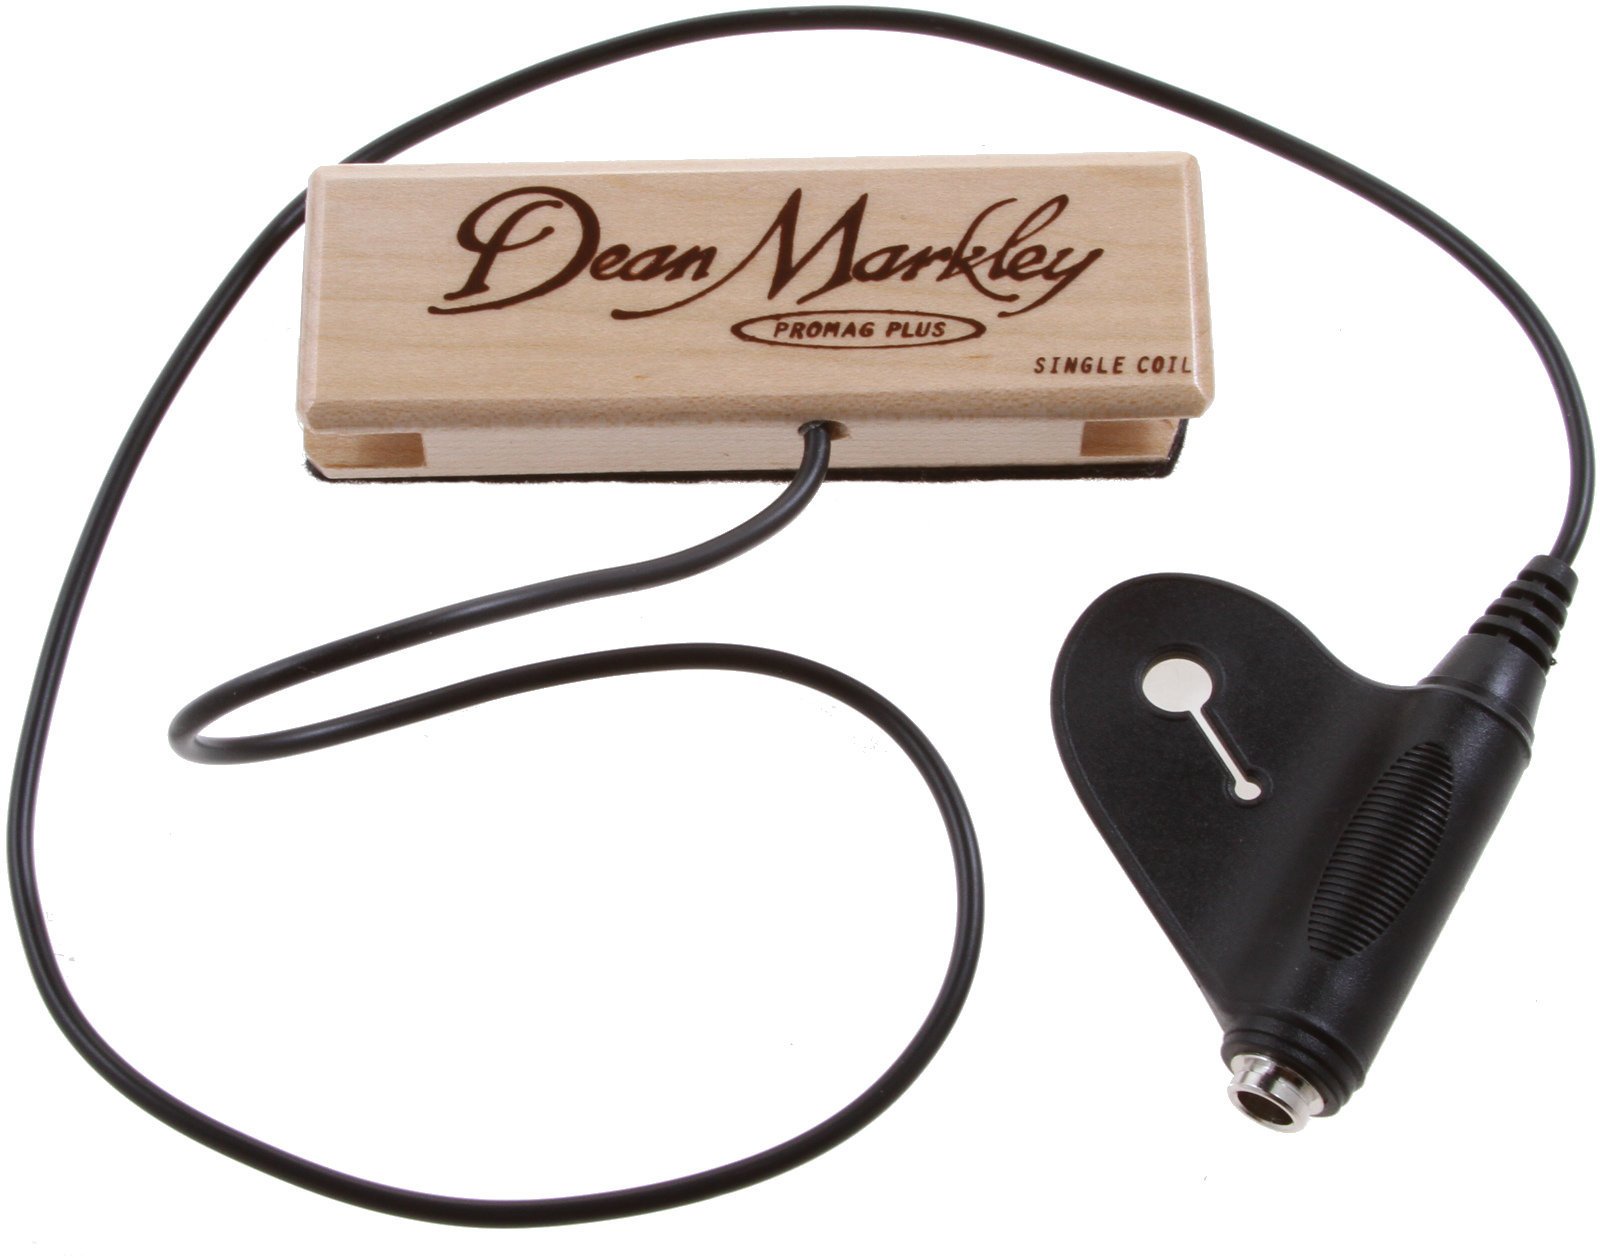 Pickup for Acoustic Guitar Dean Markley 3011 ProMag Plus XM